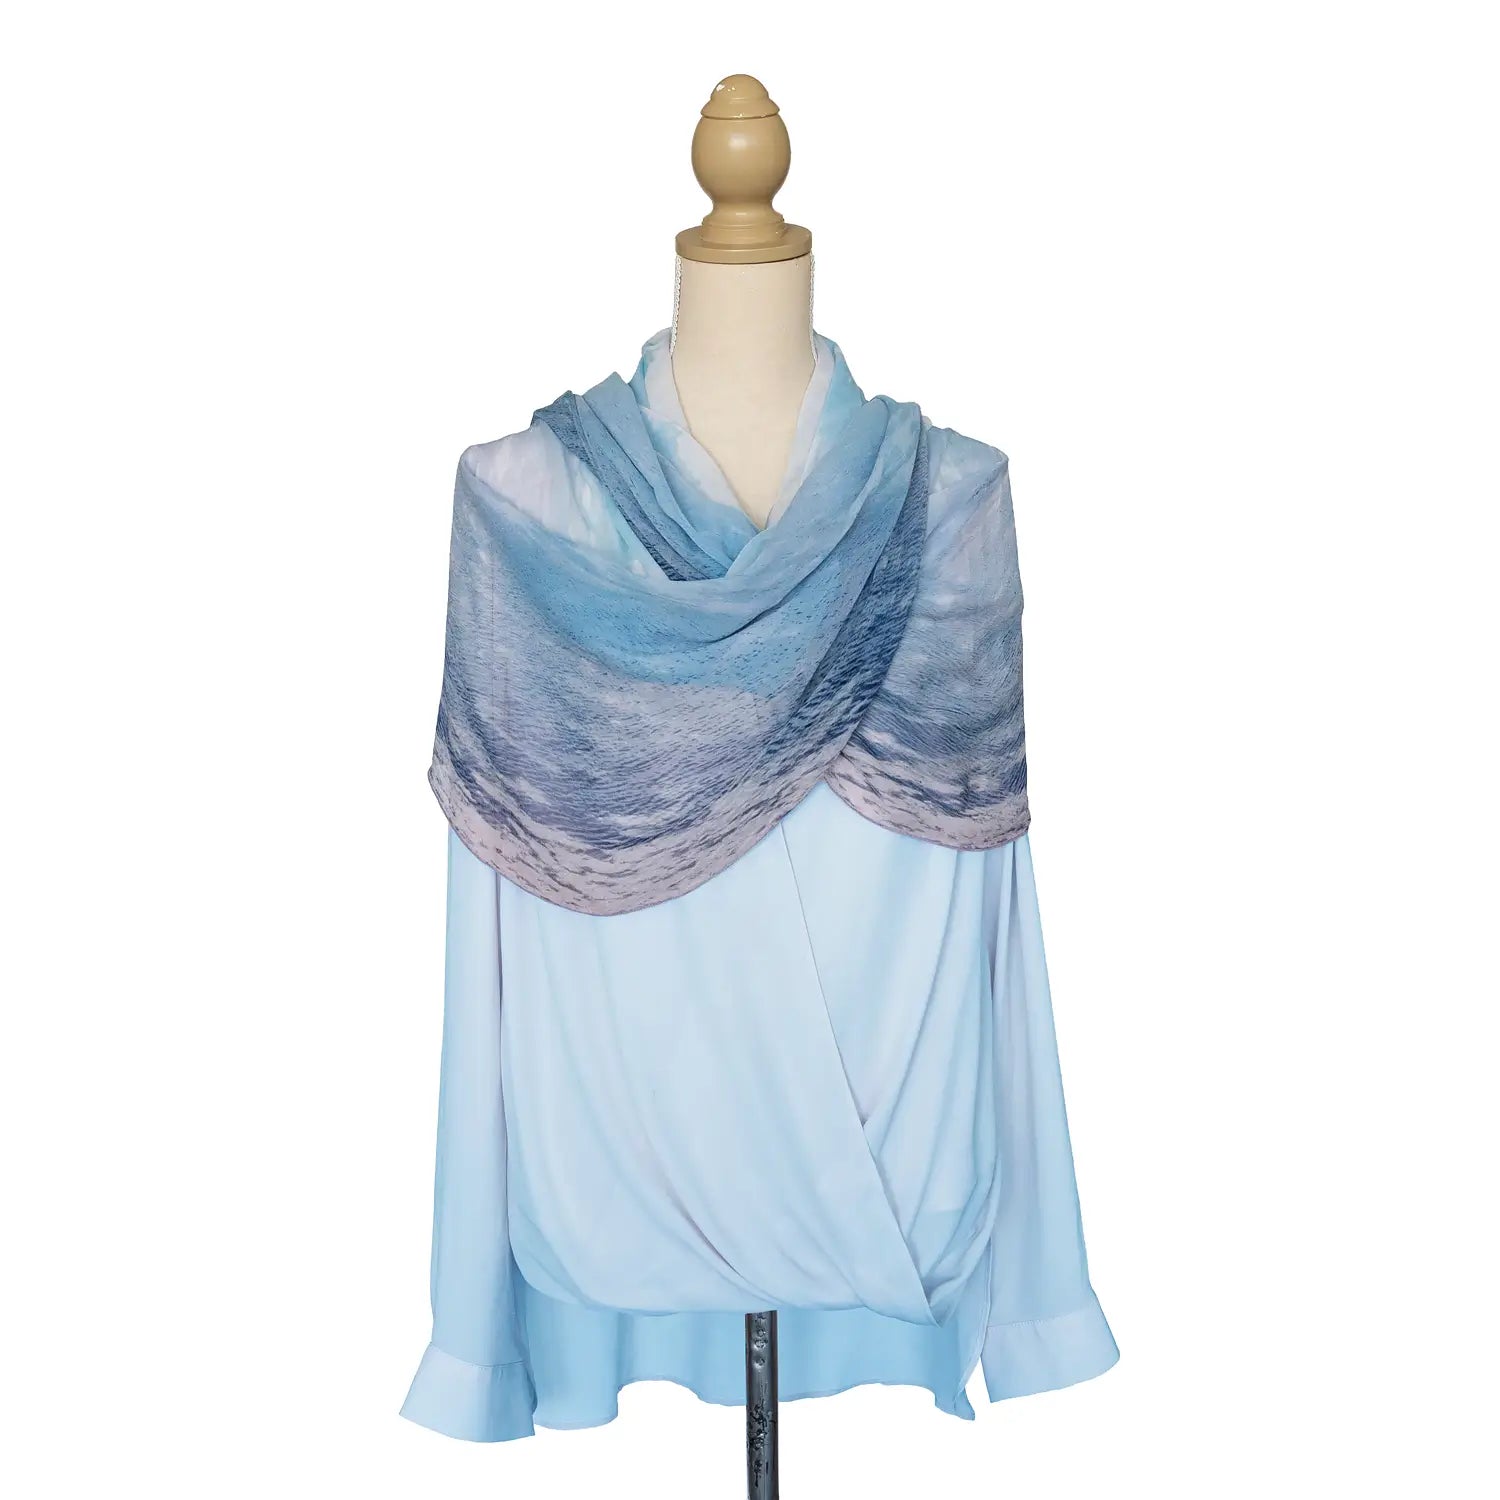 azure silk scarf by seahorse silks worn as shawl over soft blue top